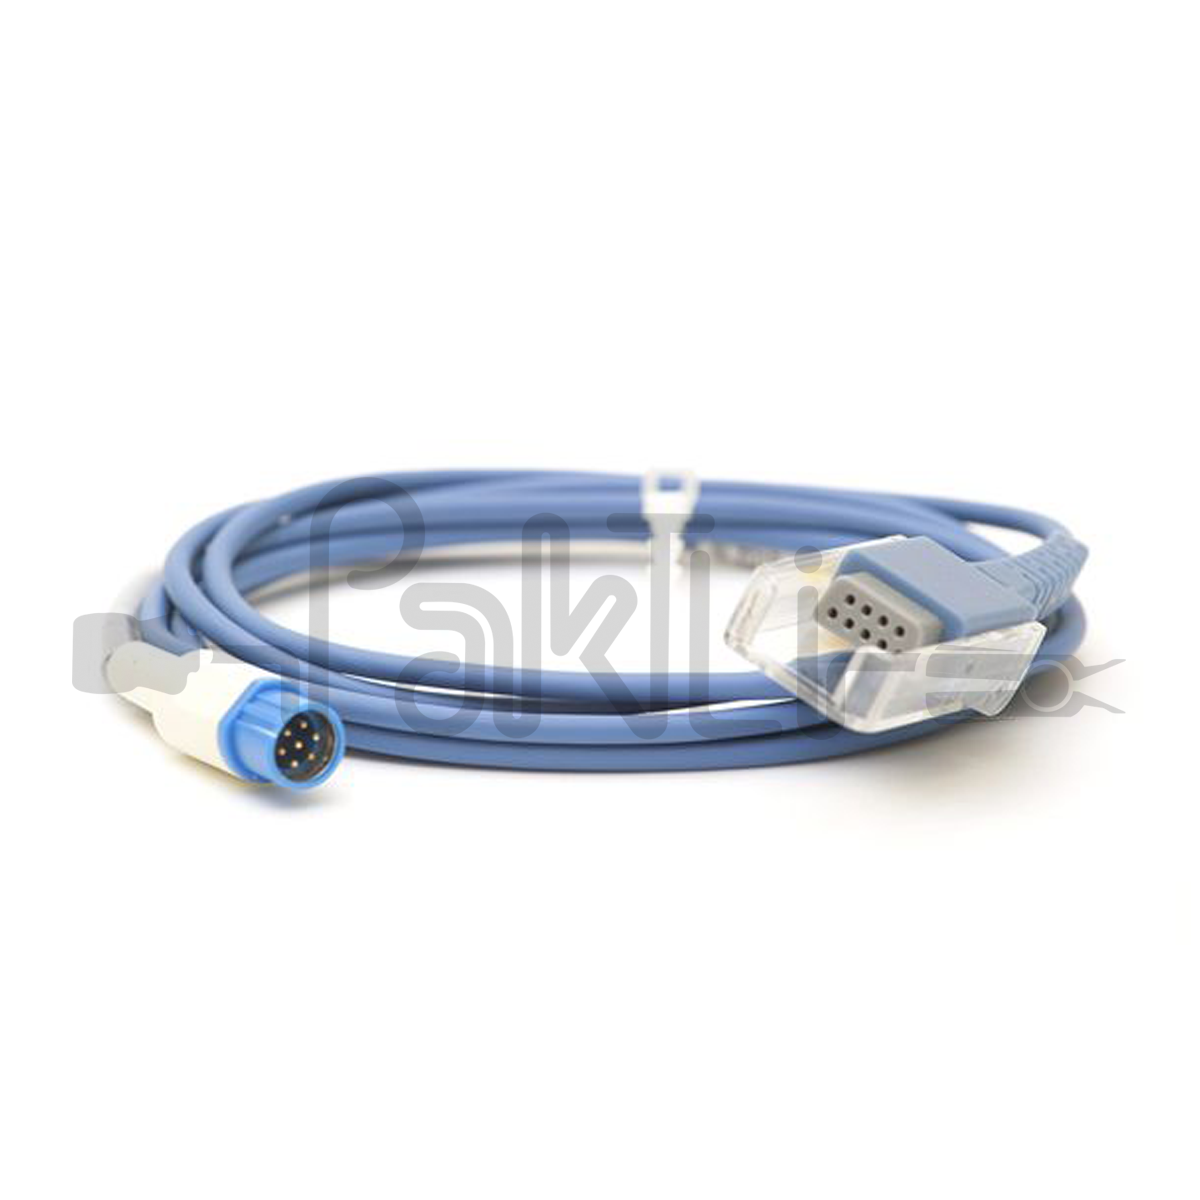 cable-extension-spo2-phillips